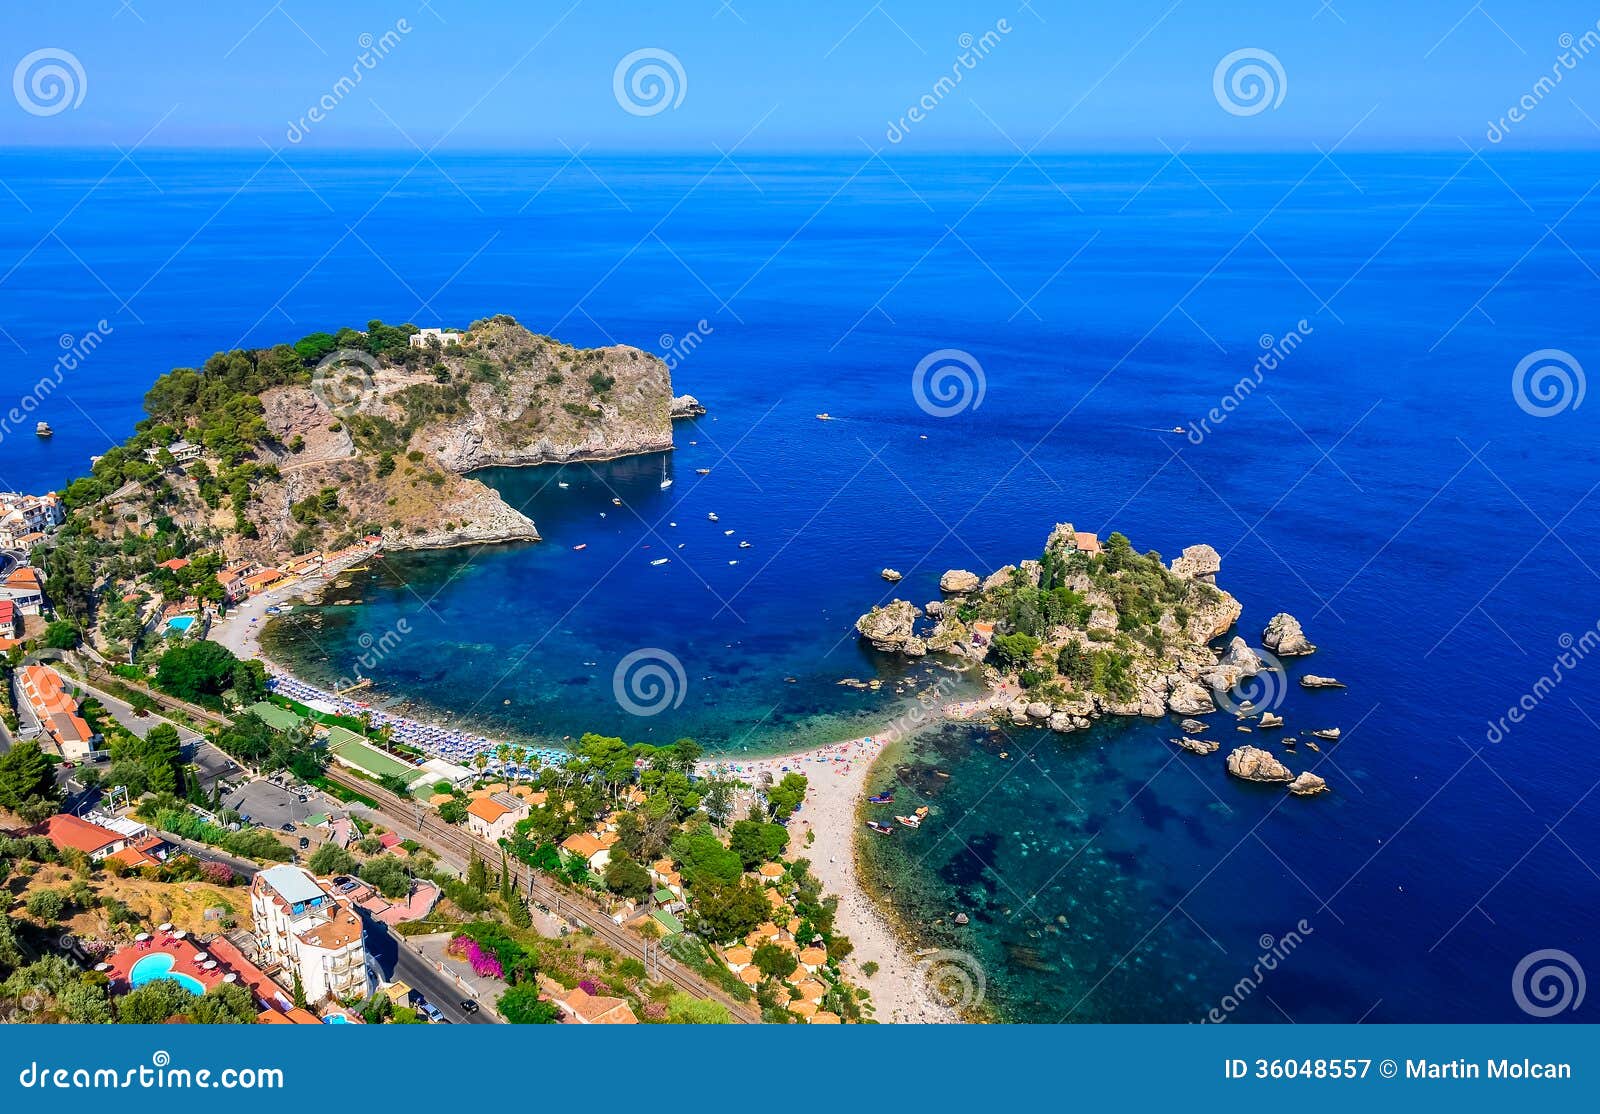 aerial view of isola bella beach coast in taormina, sicily